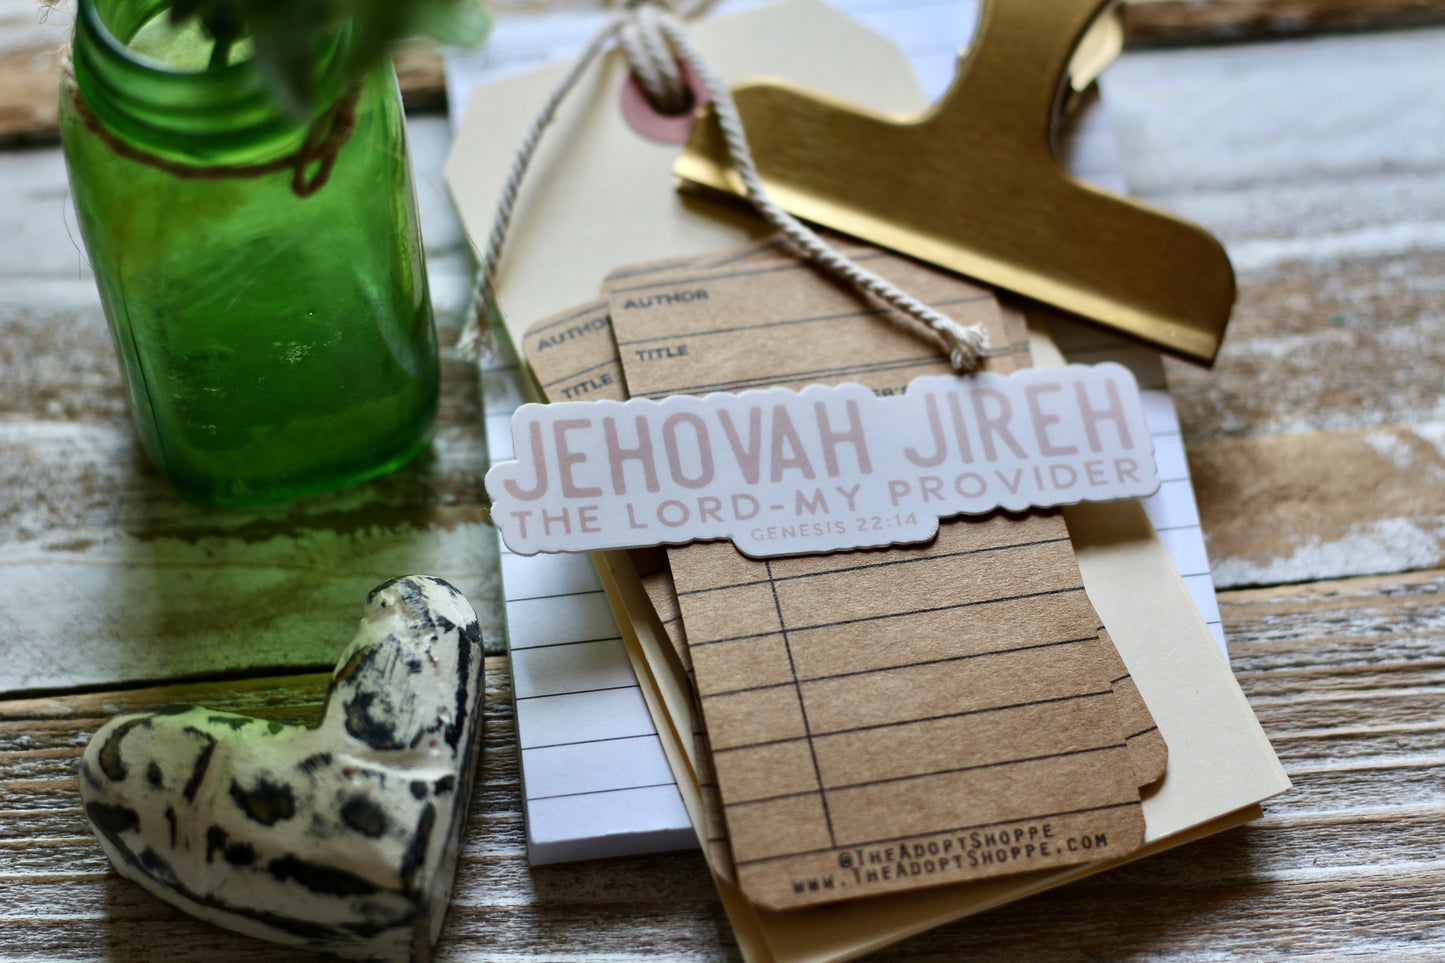 Jehovah Jireh - the Lord my provider (Genesis 22:14) vinyl sticker